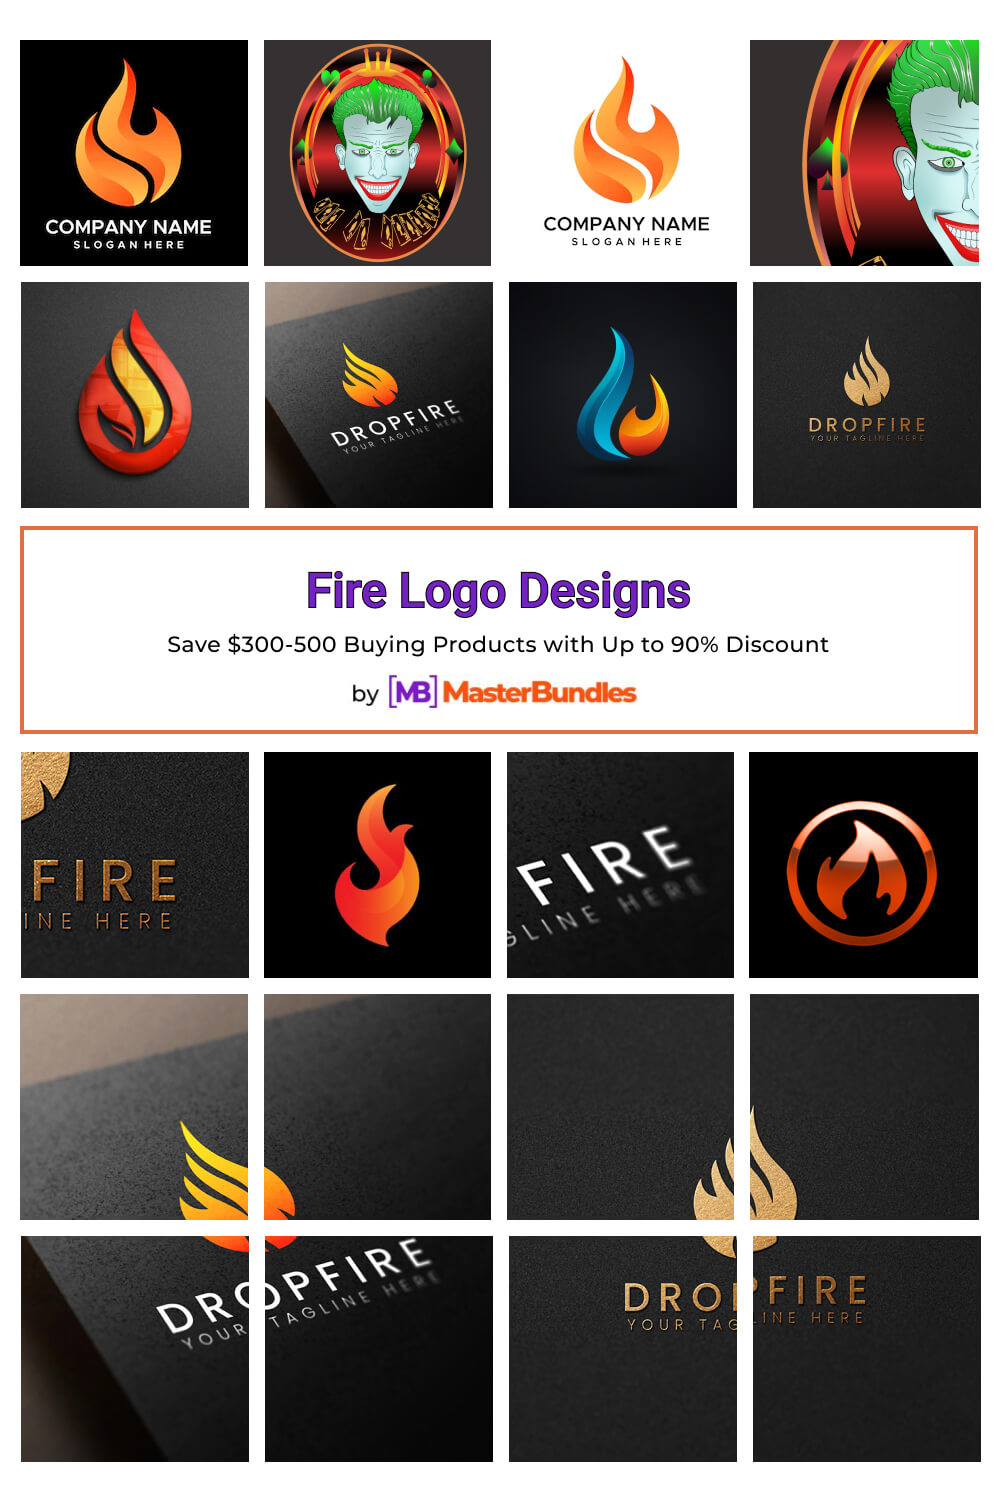 fire logo designs pinterest image.